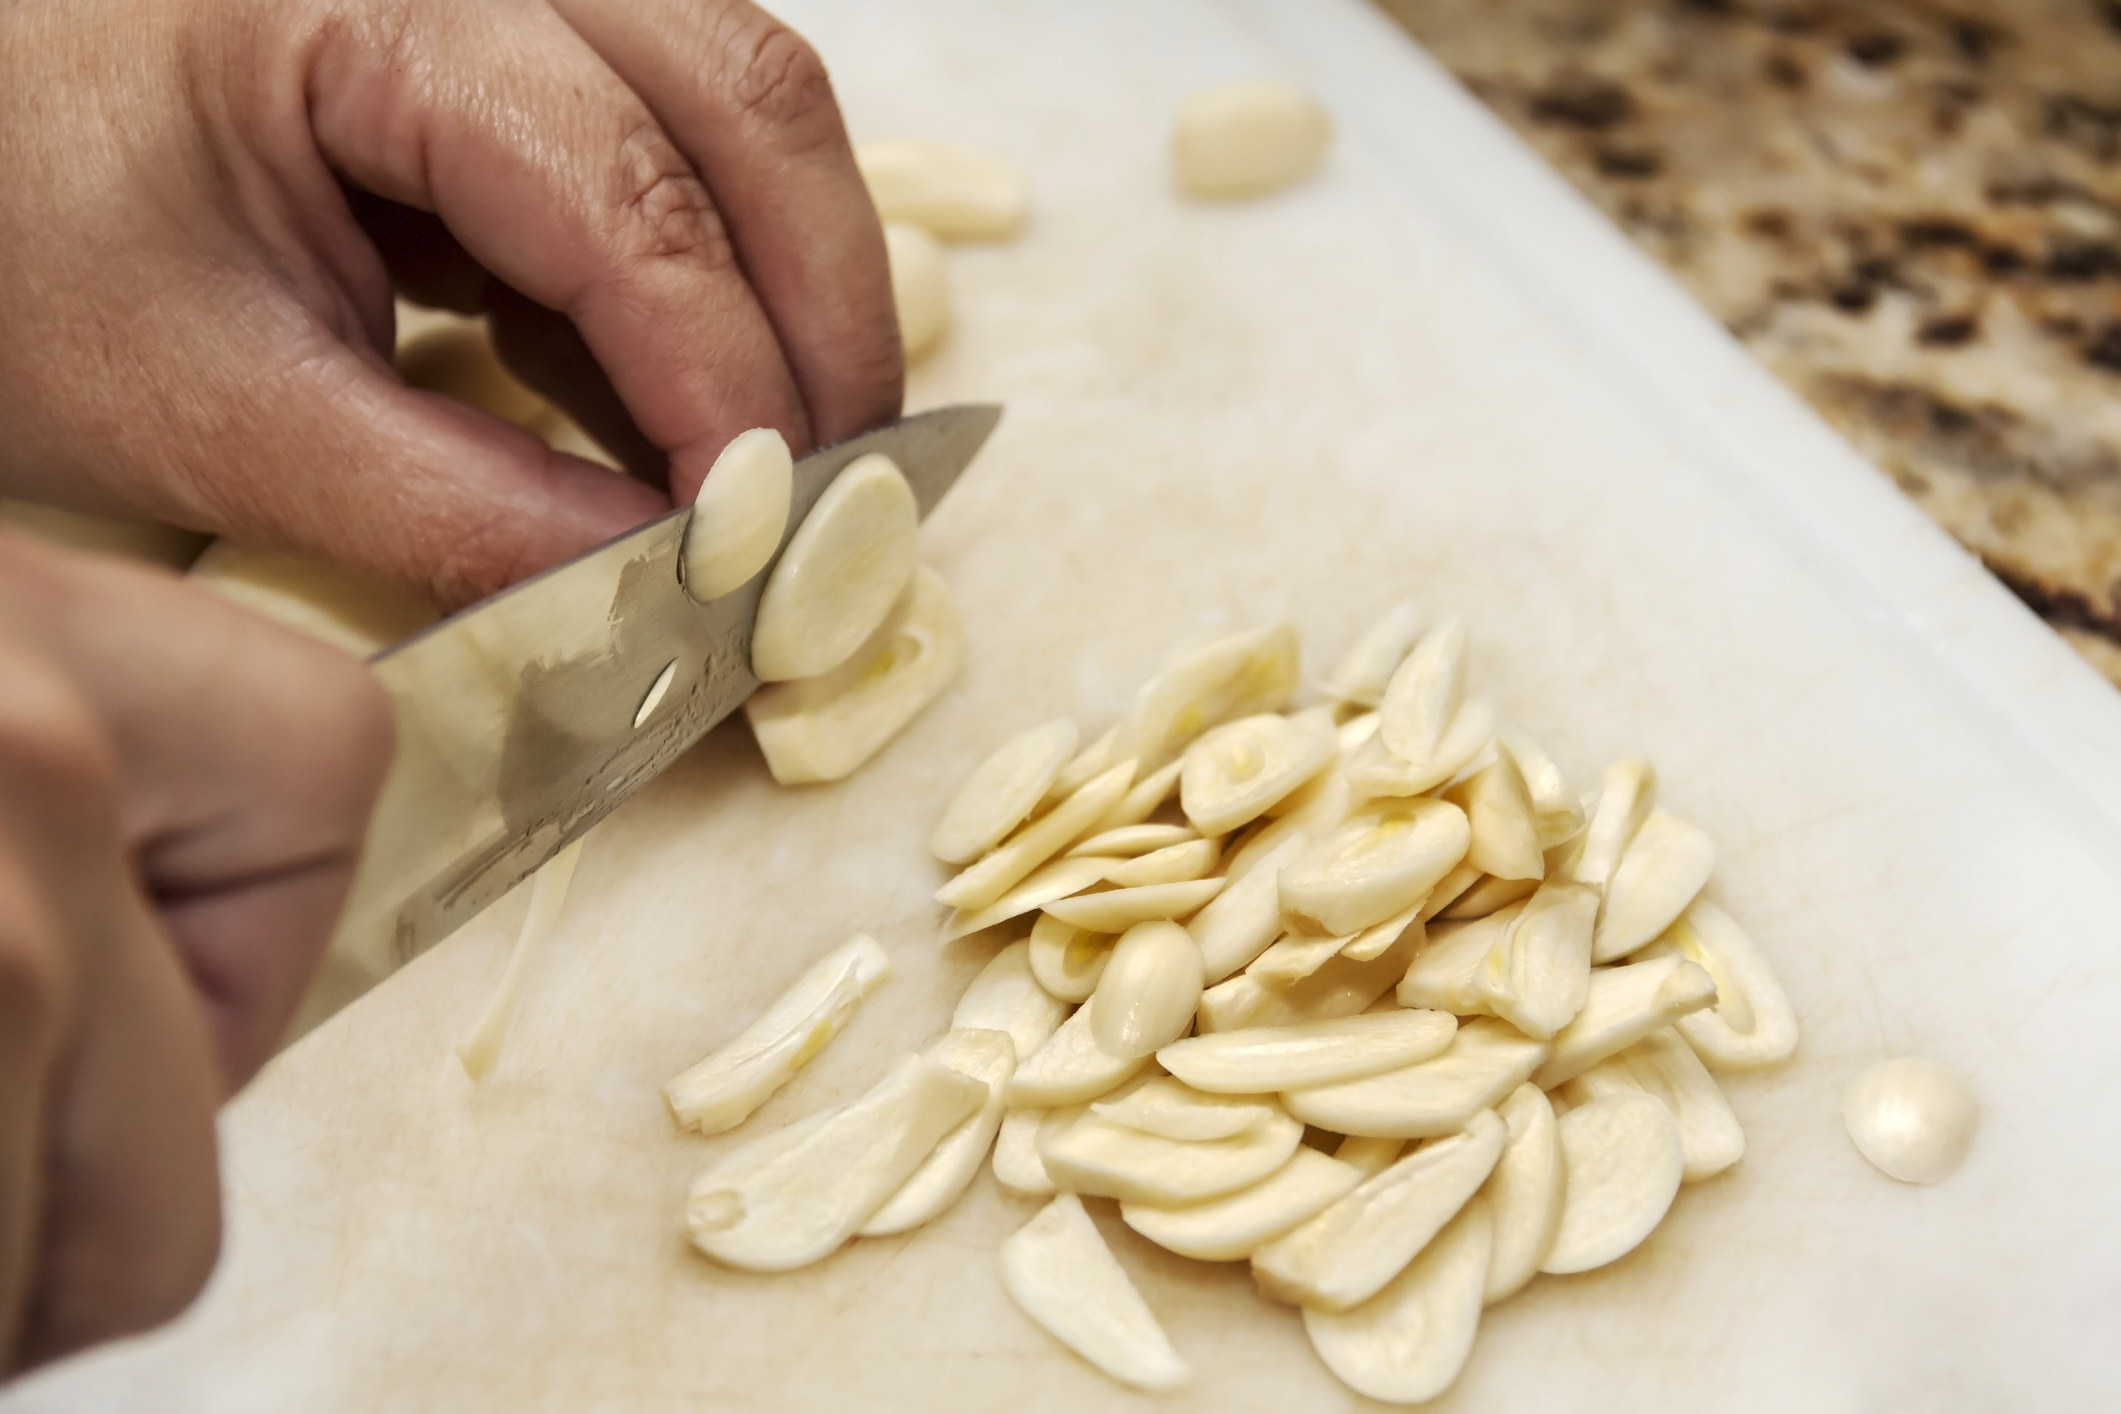 Hands slicing garlic